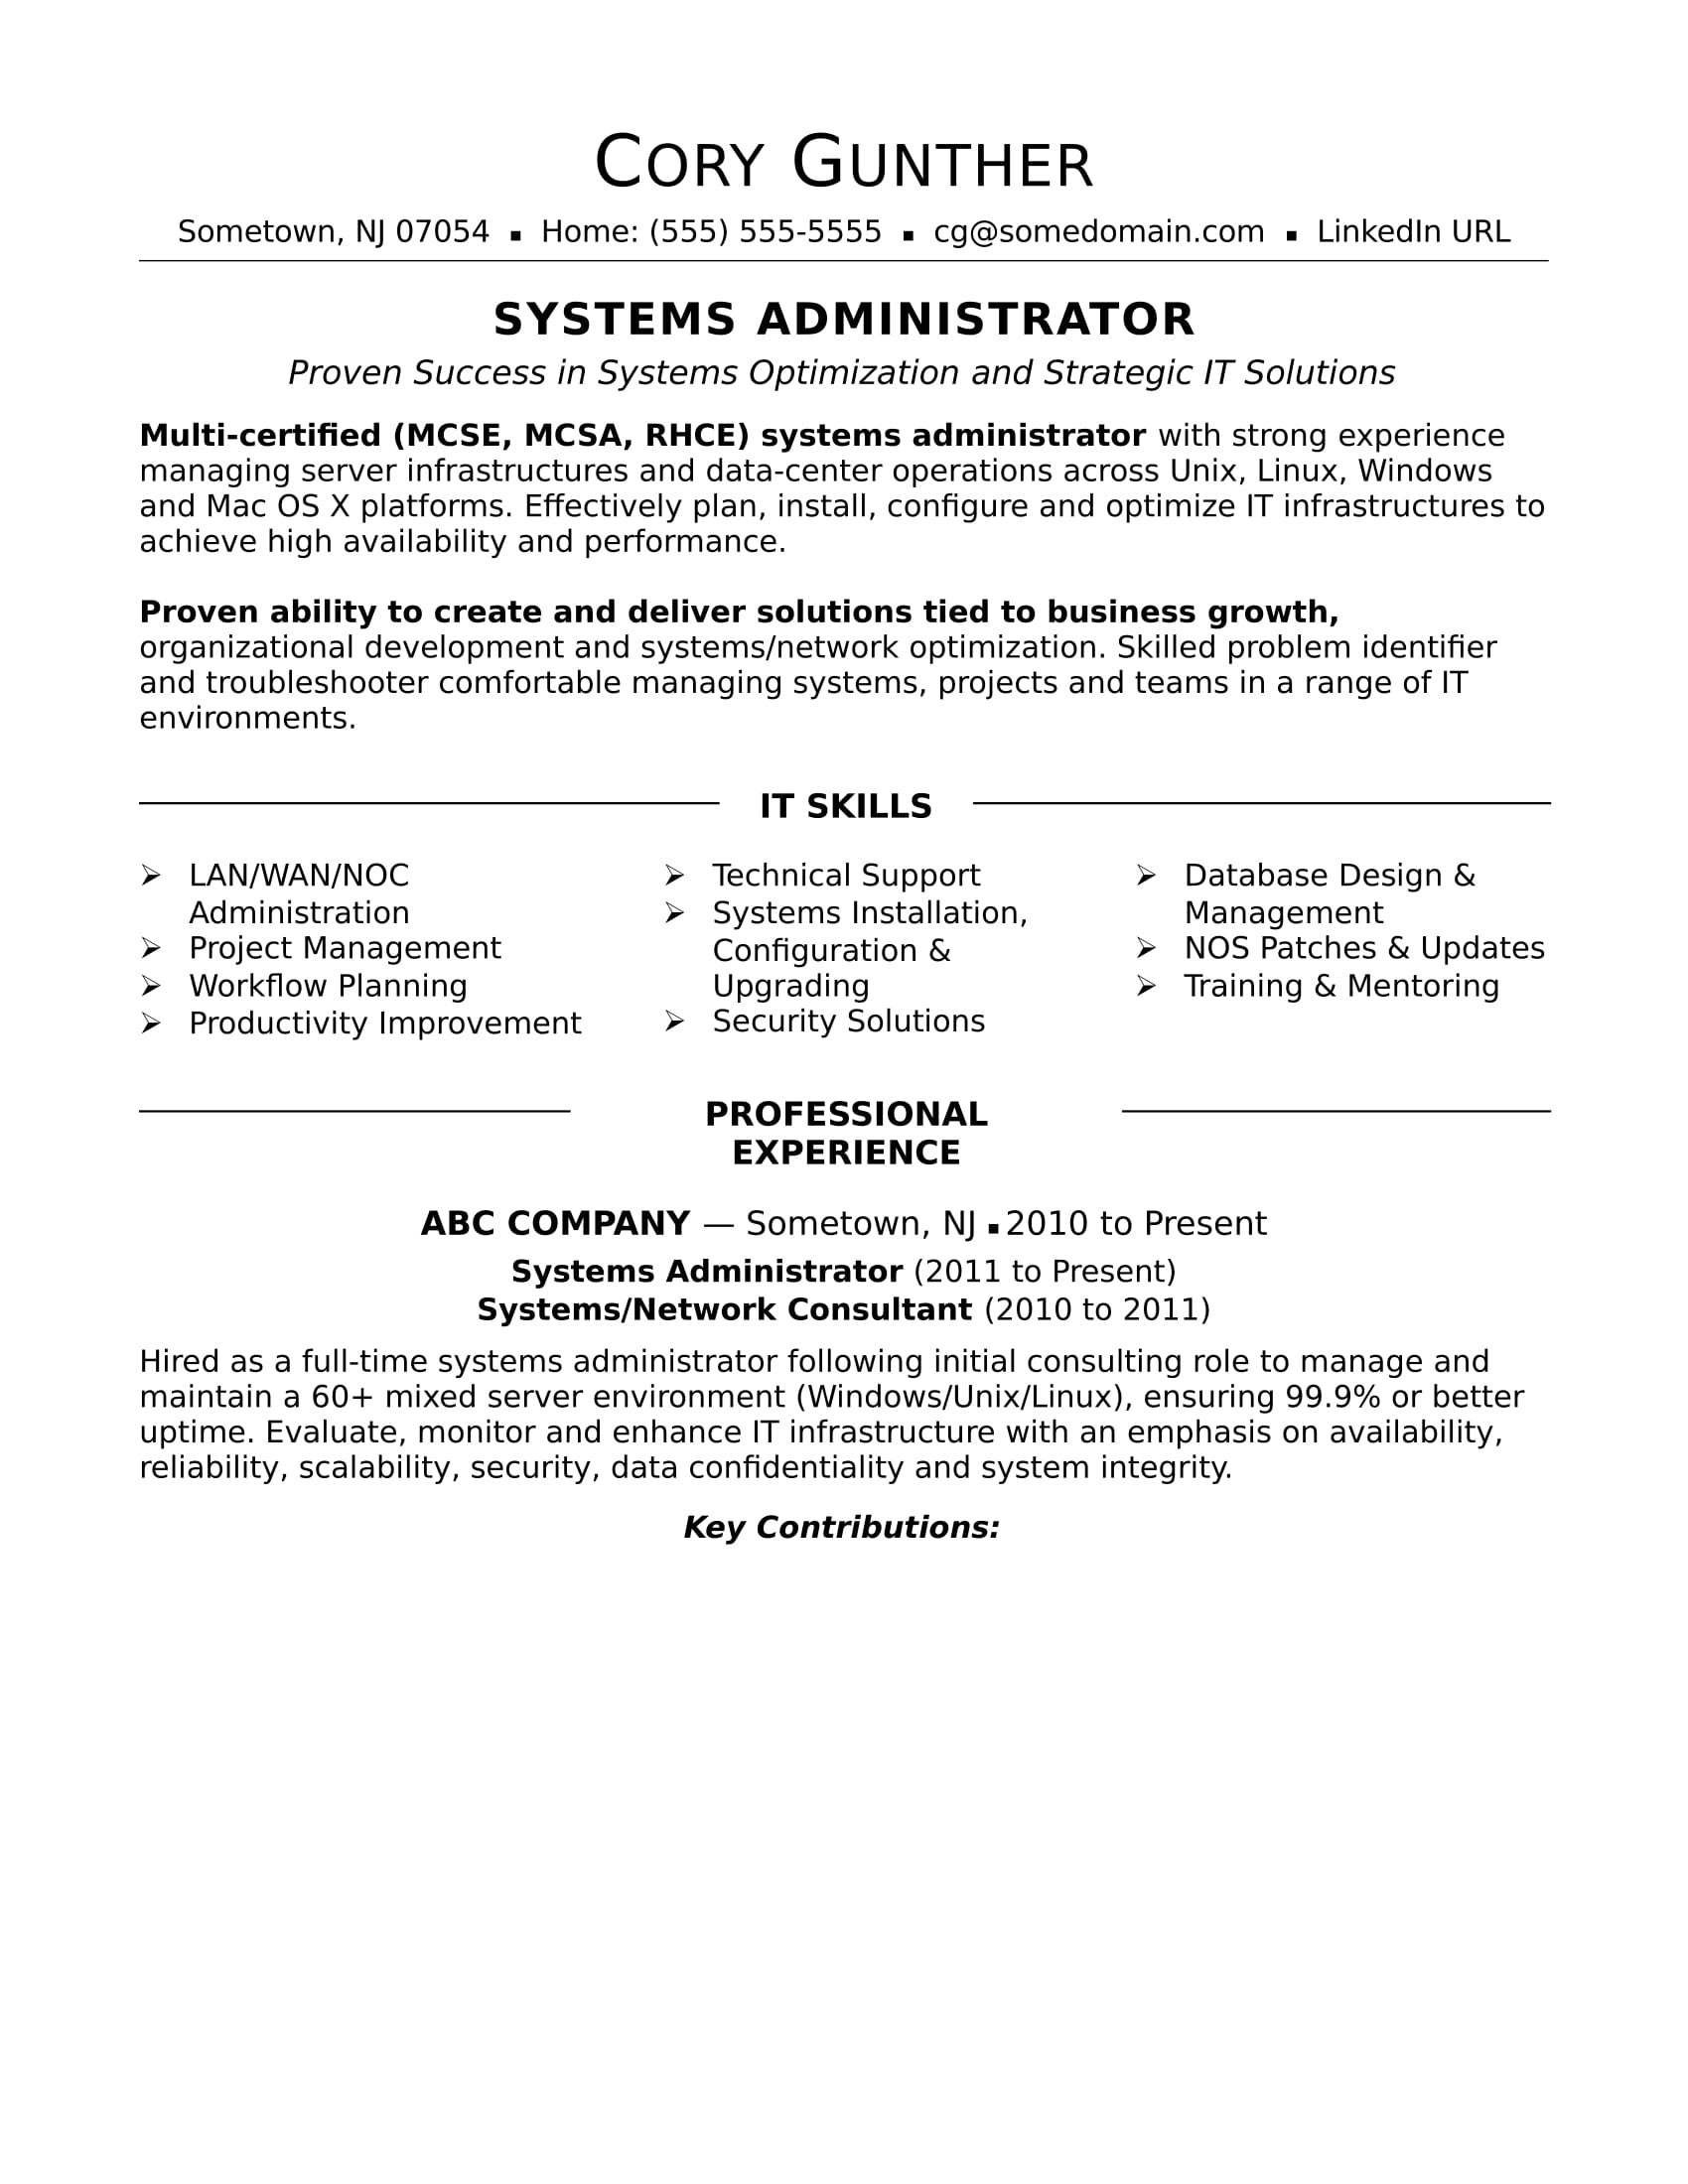 Linux System Administrator Sample Resume 2 Years Experience Sample Resume for An Experienced Systems Administrator Monster.com